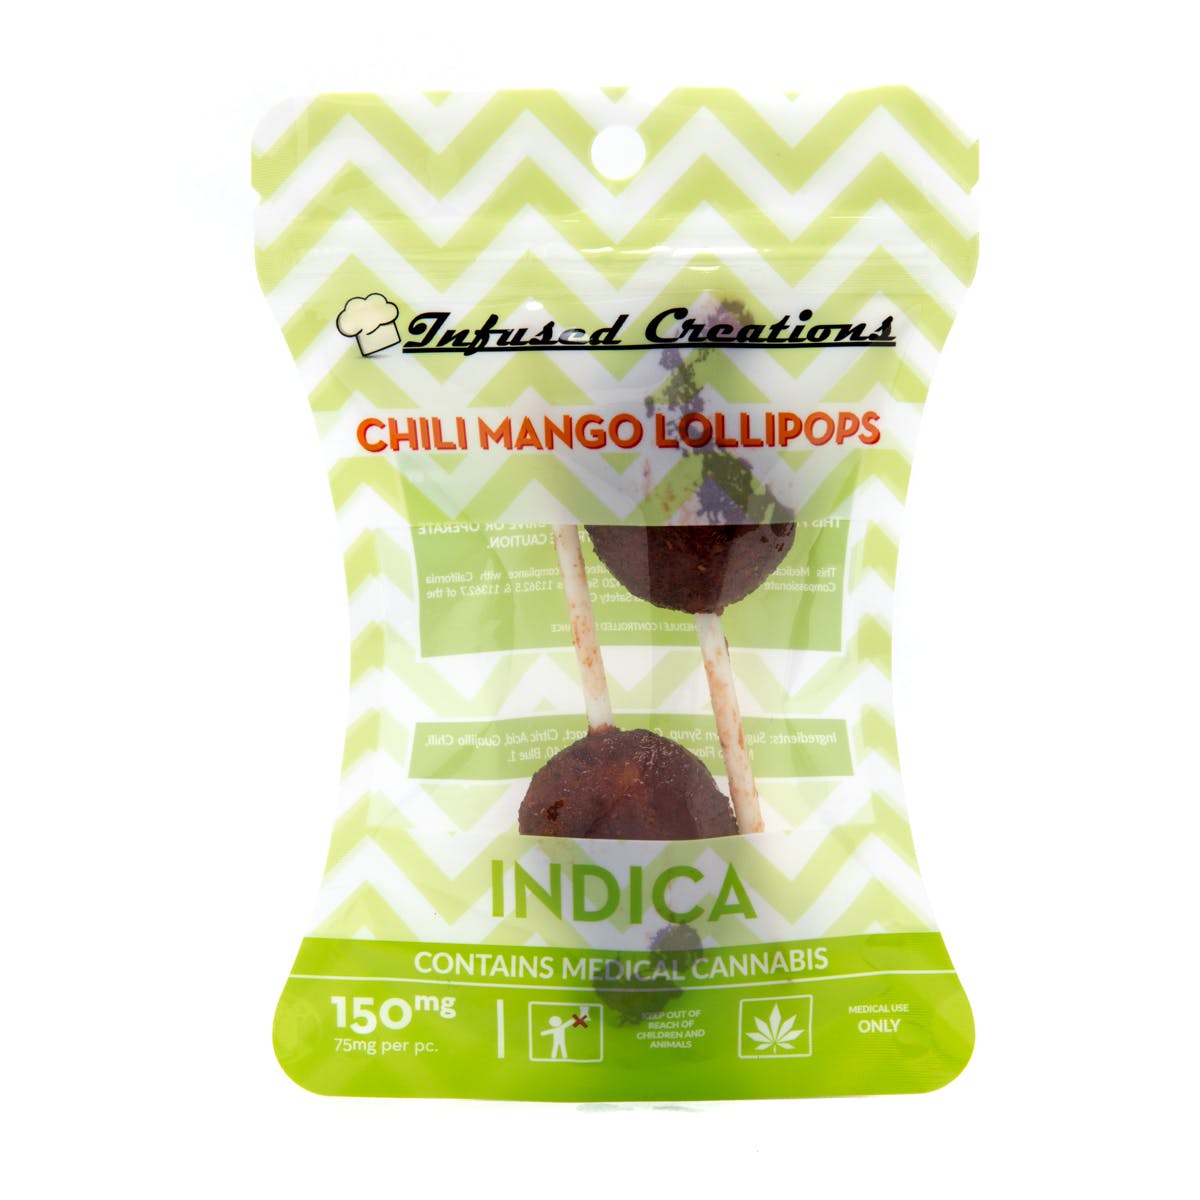 Chili Mango Lollipops Indica, 150mg